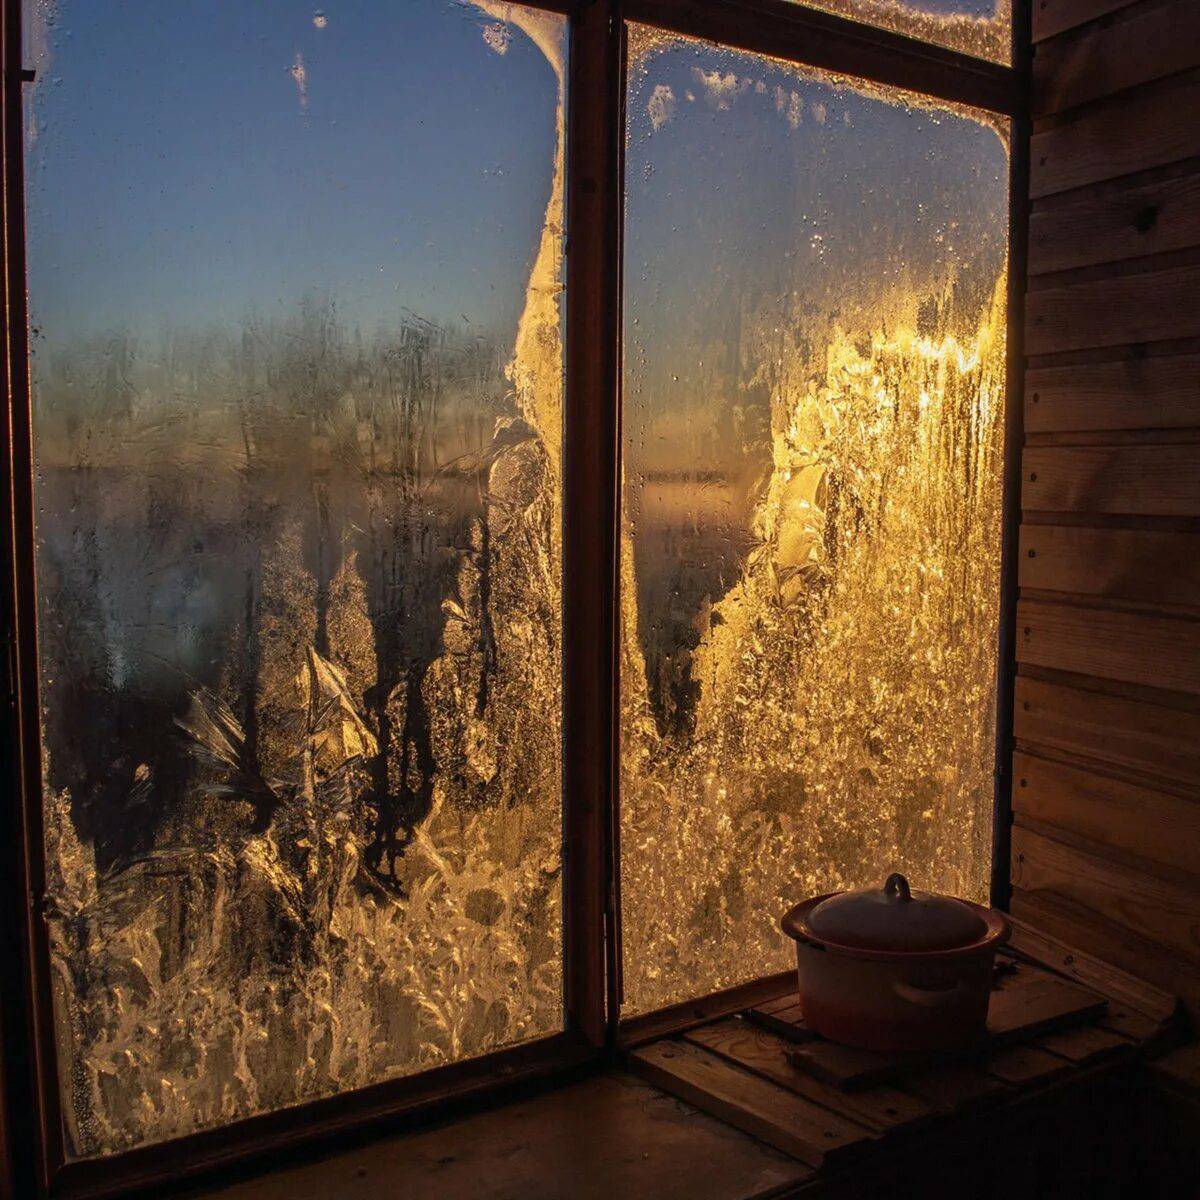 Зимнее окно. Вид из окна. Вид из окна зима. Зимнее солнце в окне. Яркое зимнее солнце заглянуло